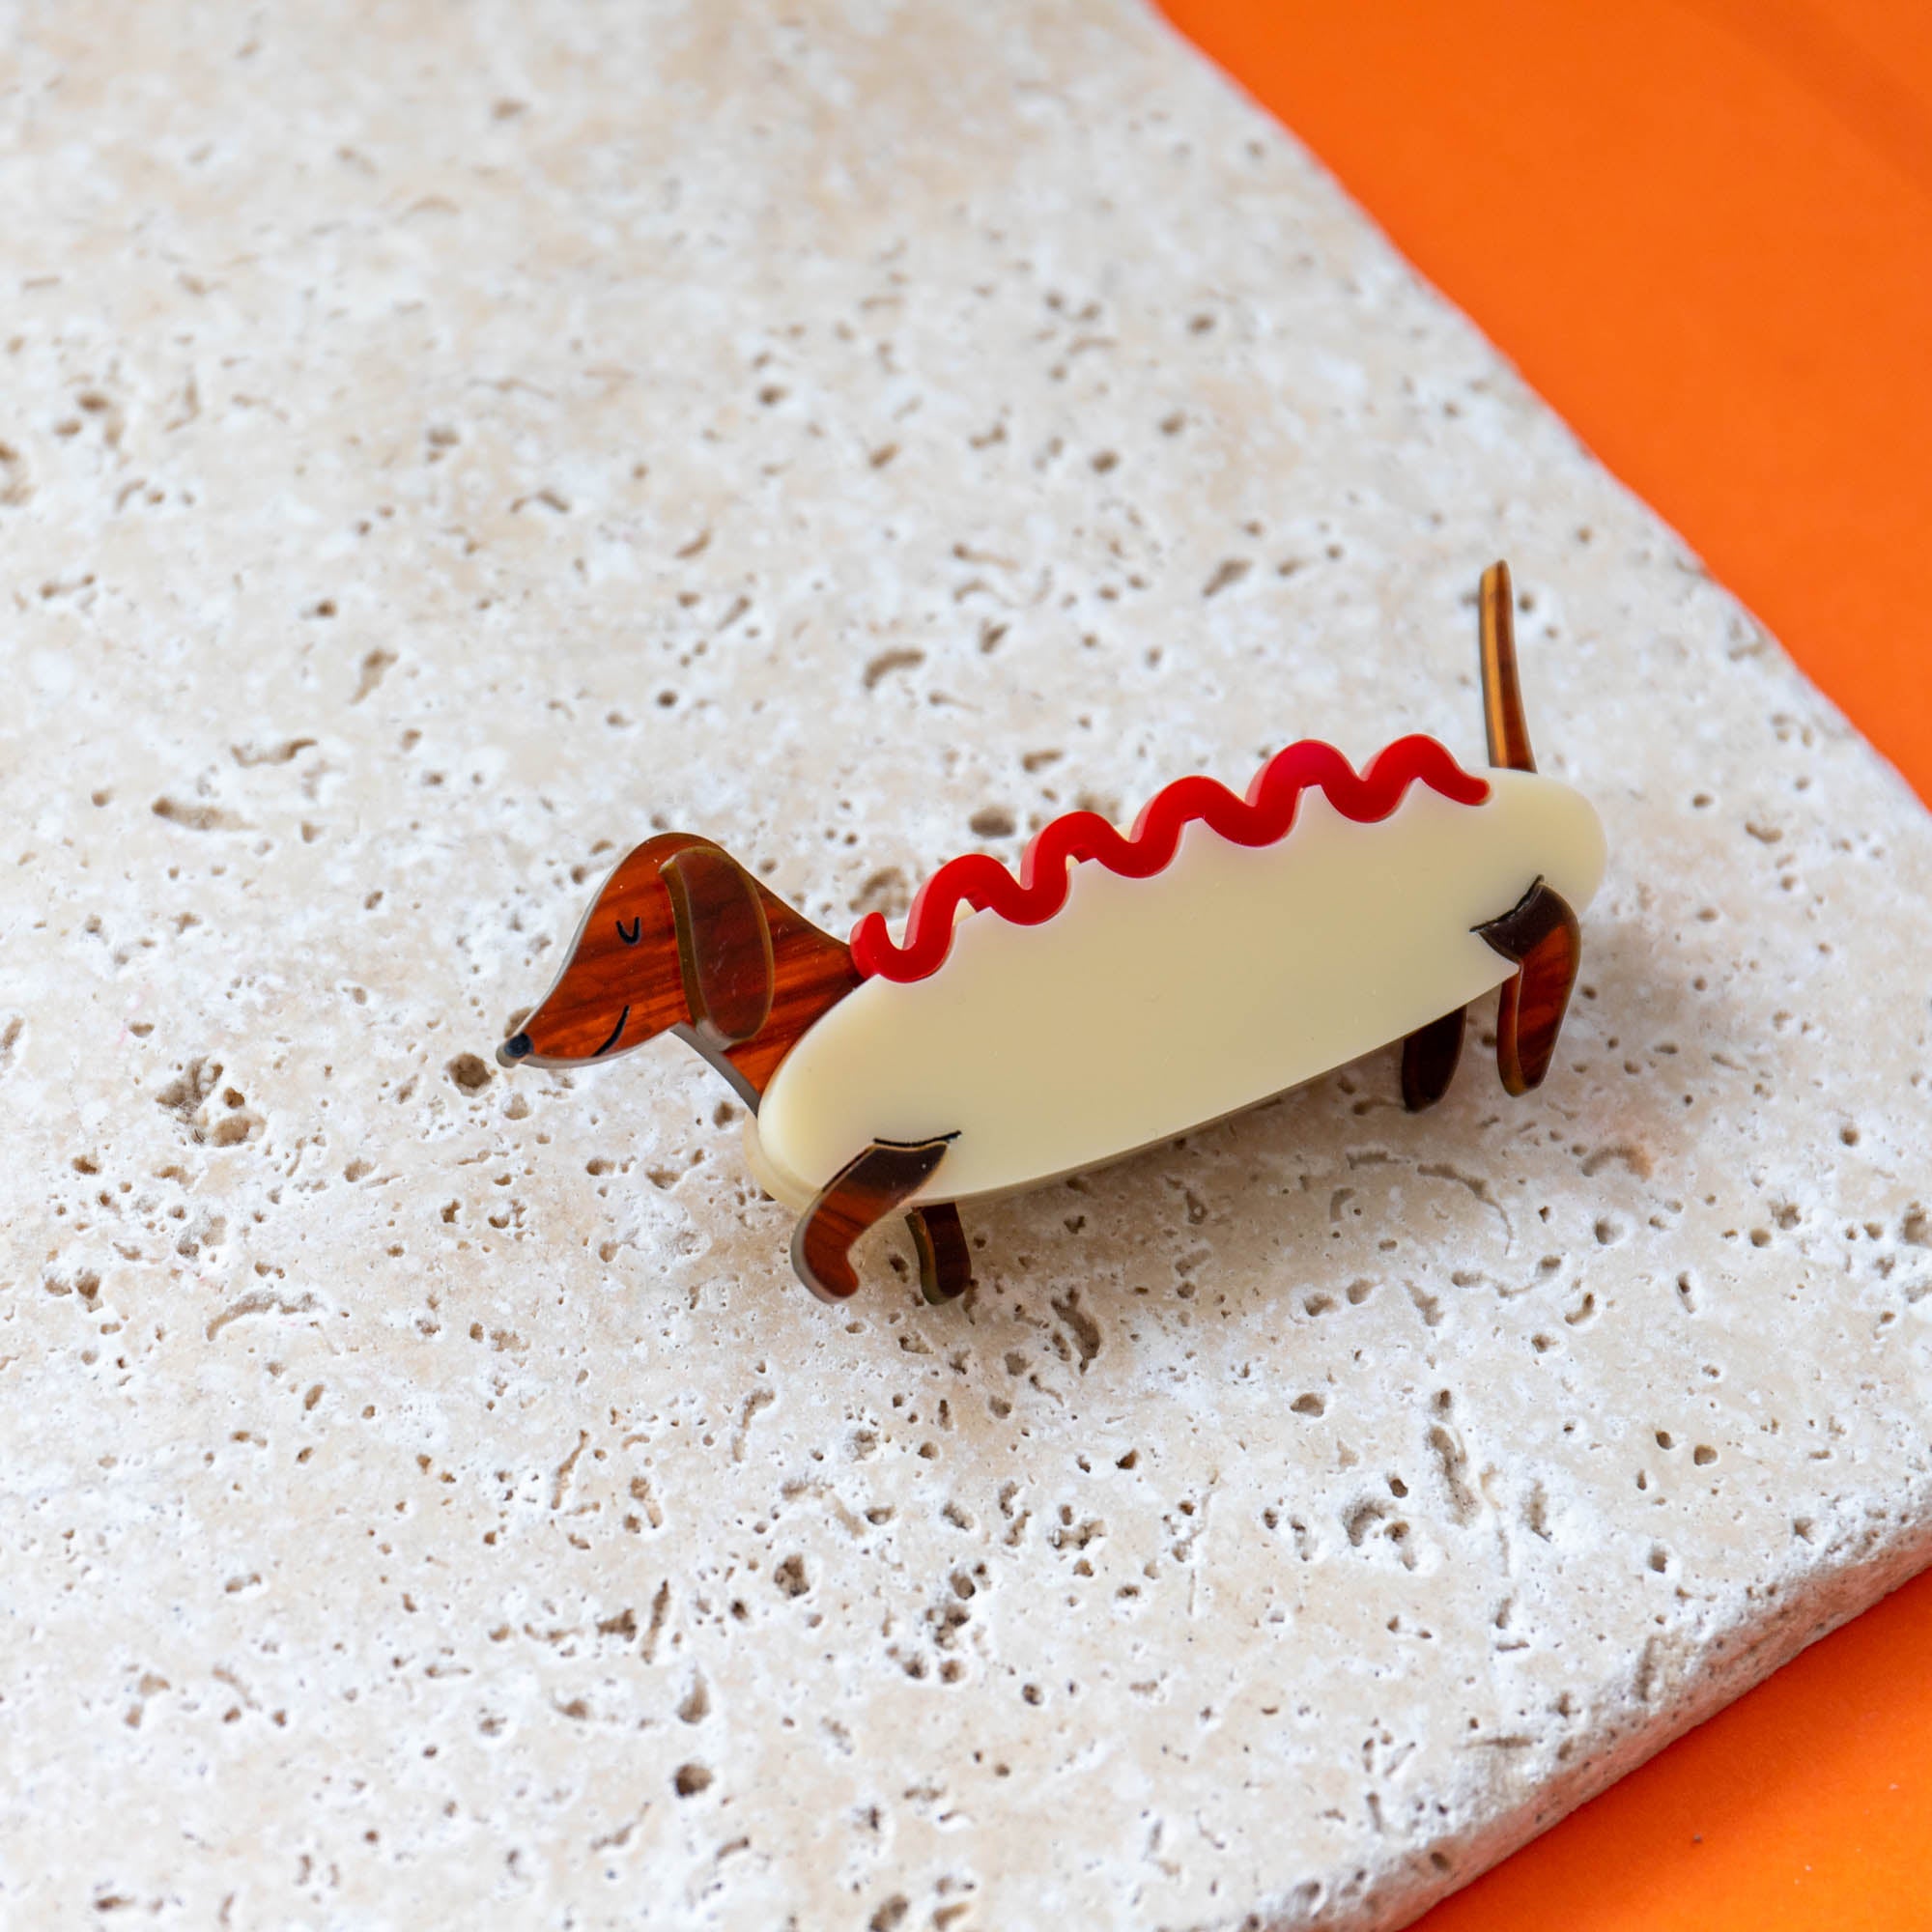 Dachshund Hot Dog Costume Brooch - Finest Imaginary